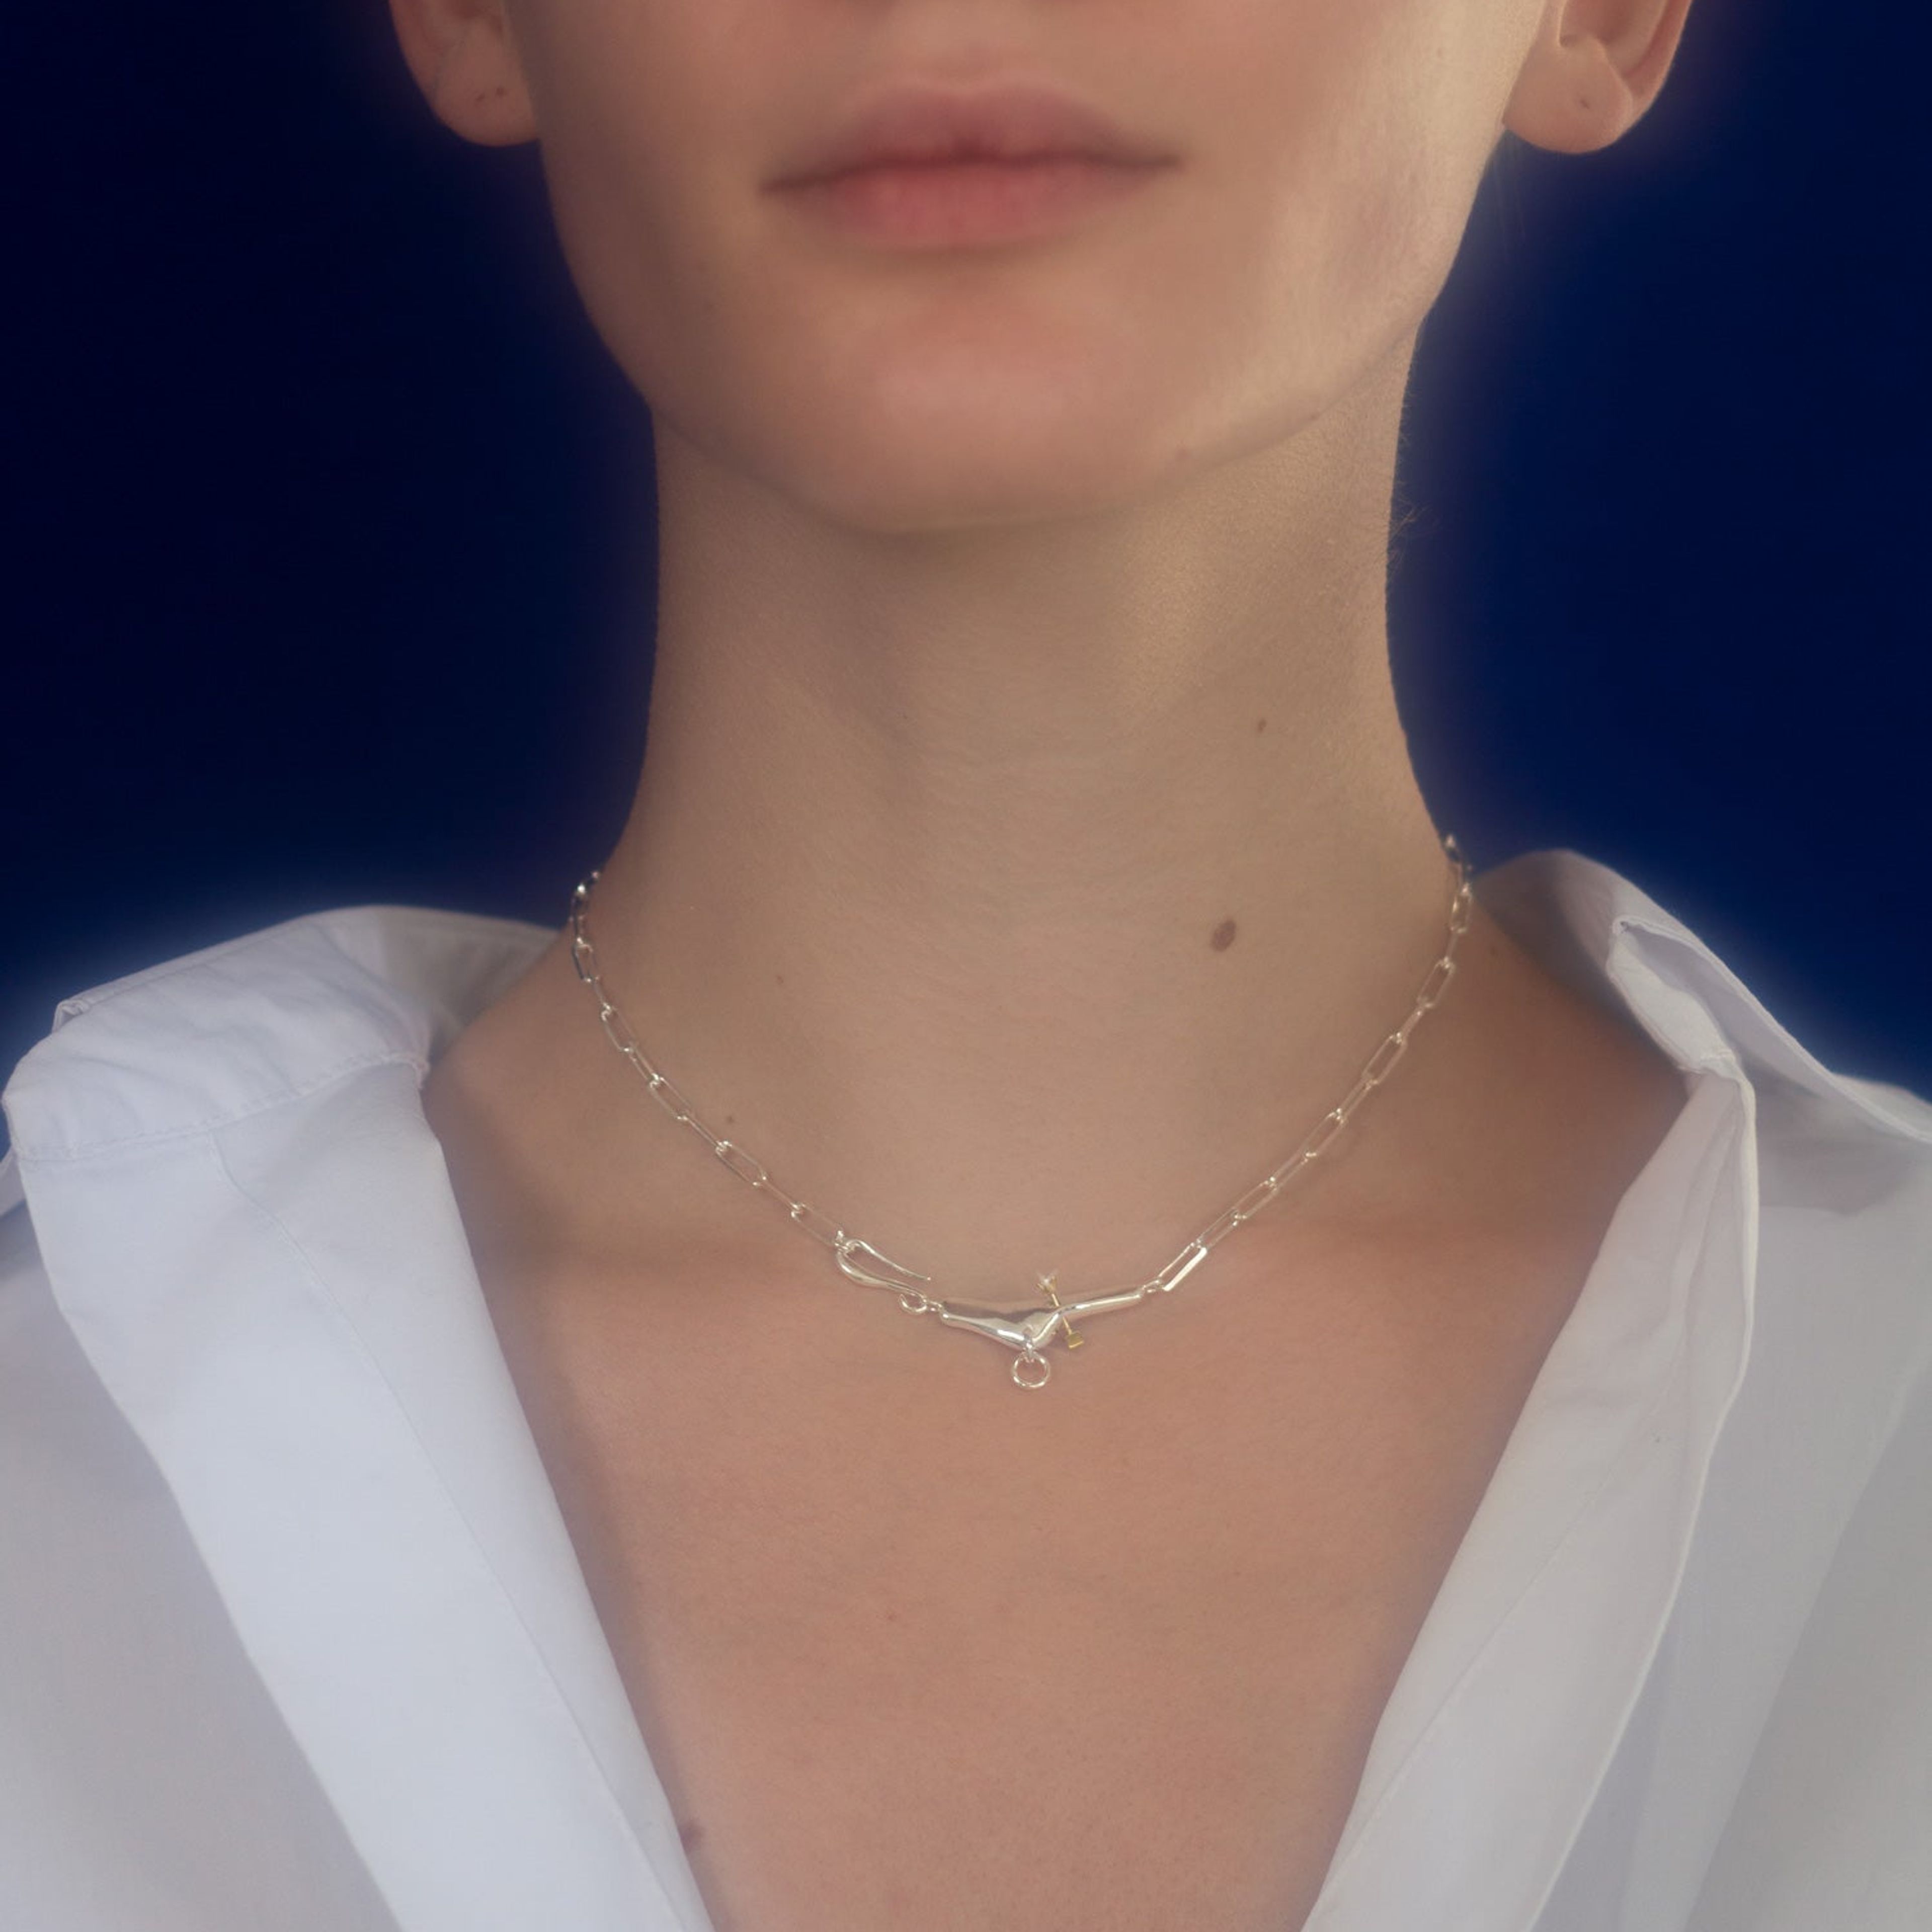 Apex Necklace